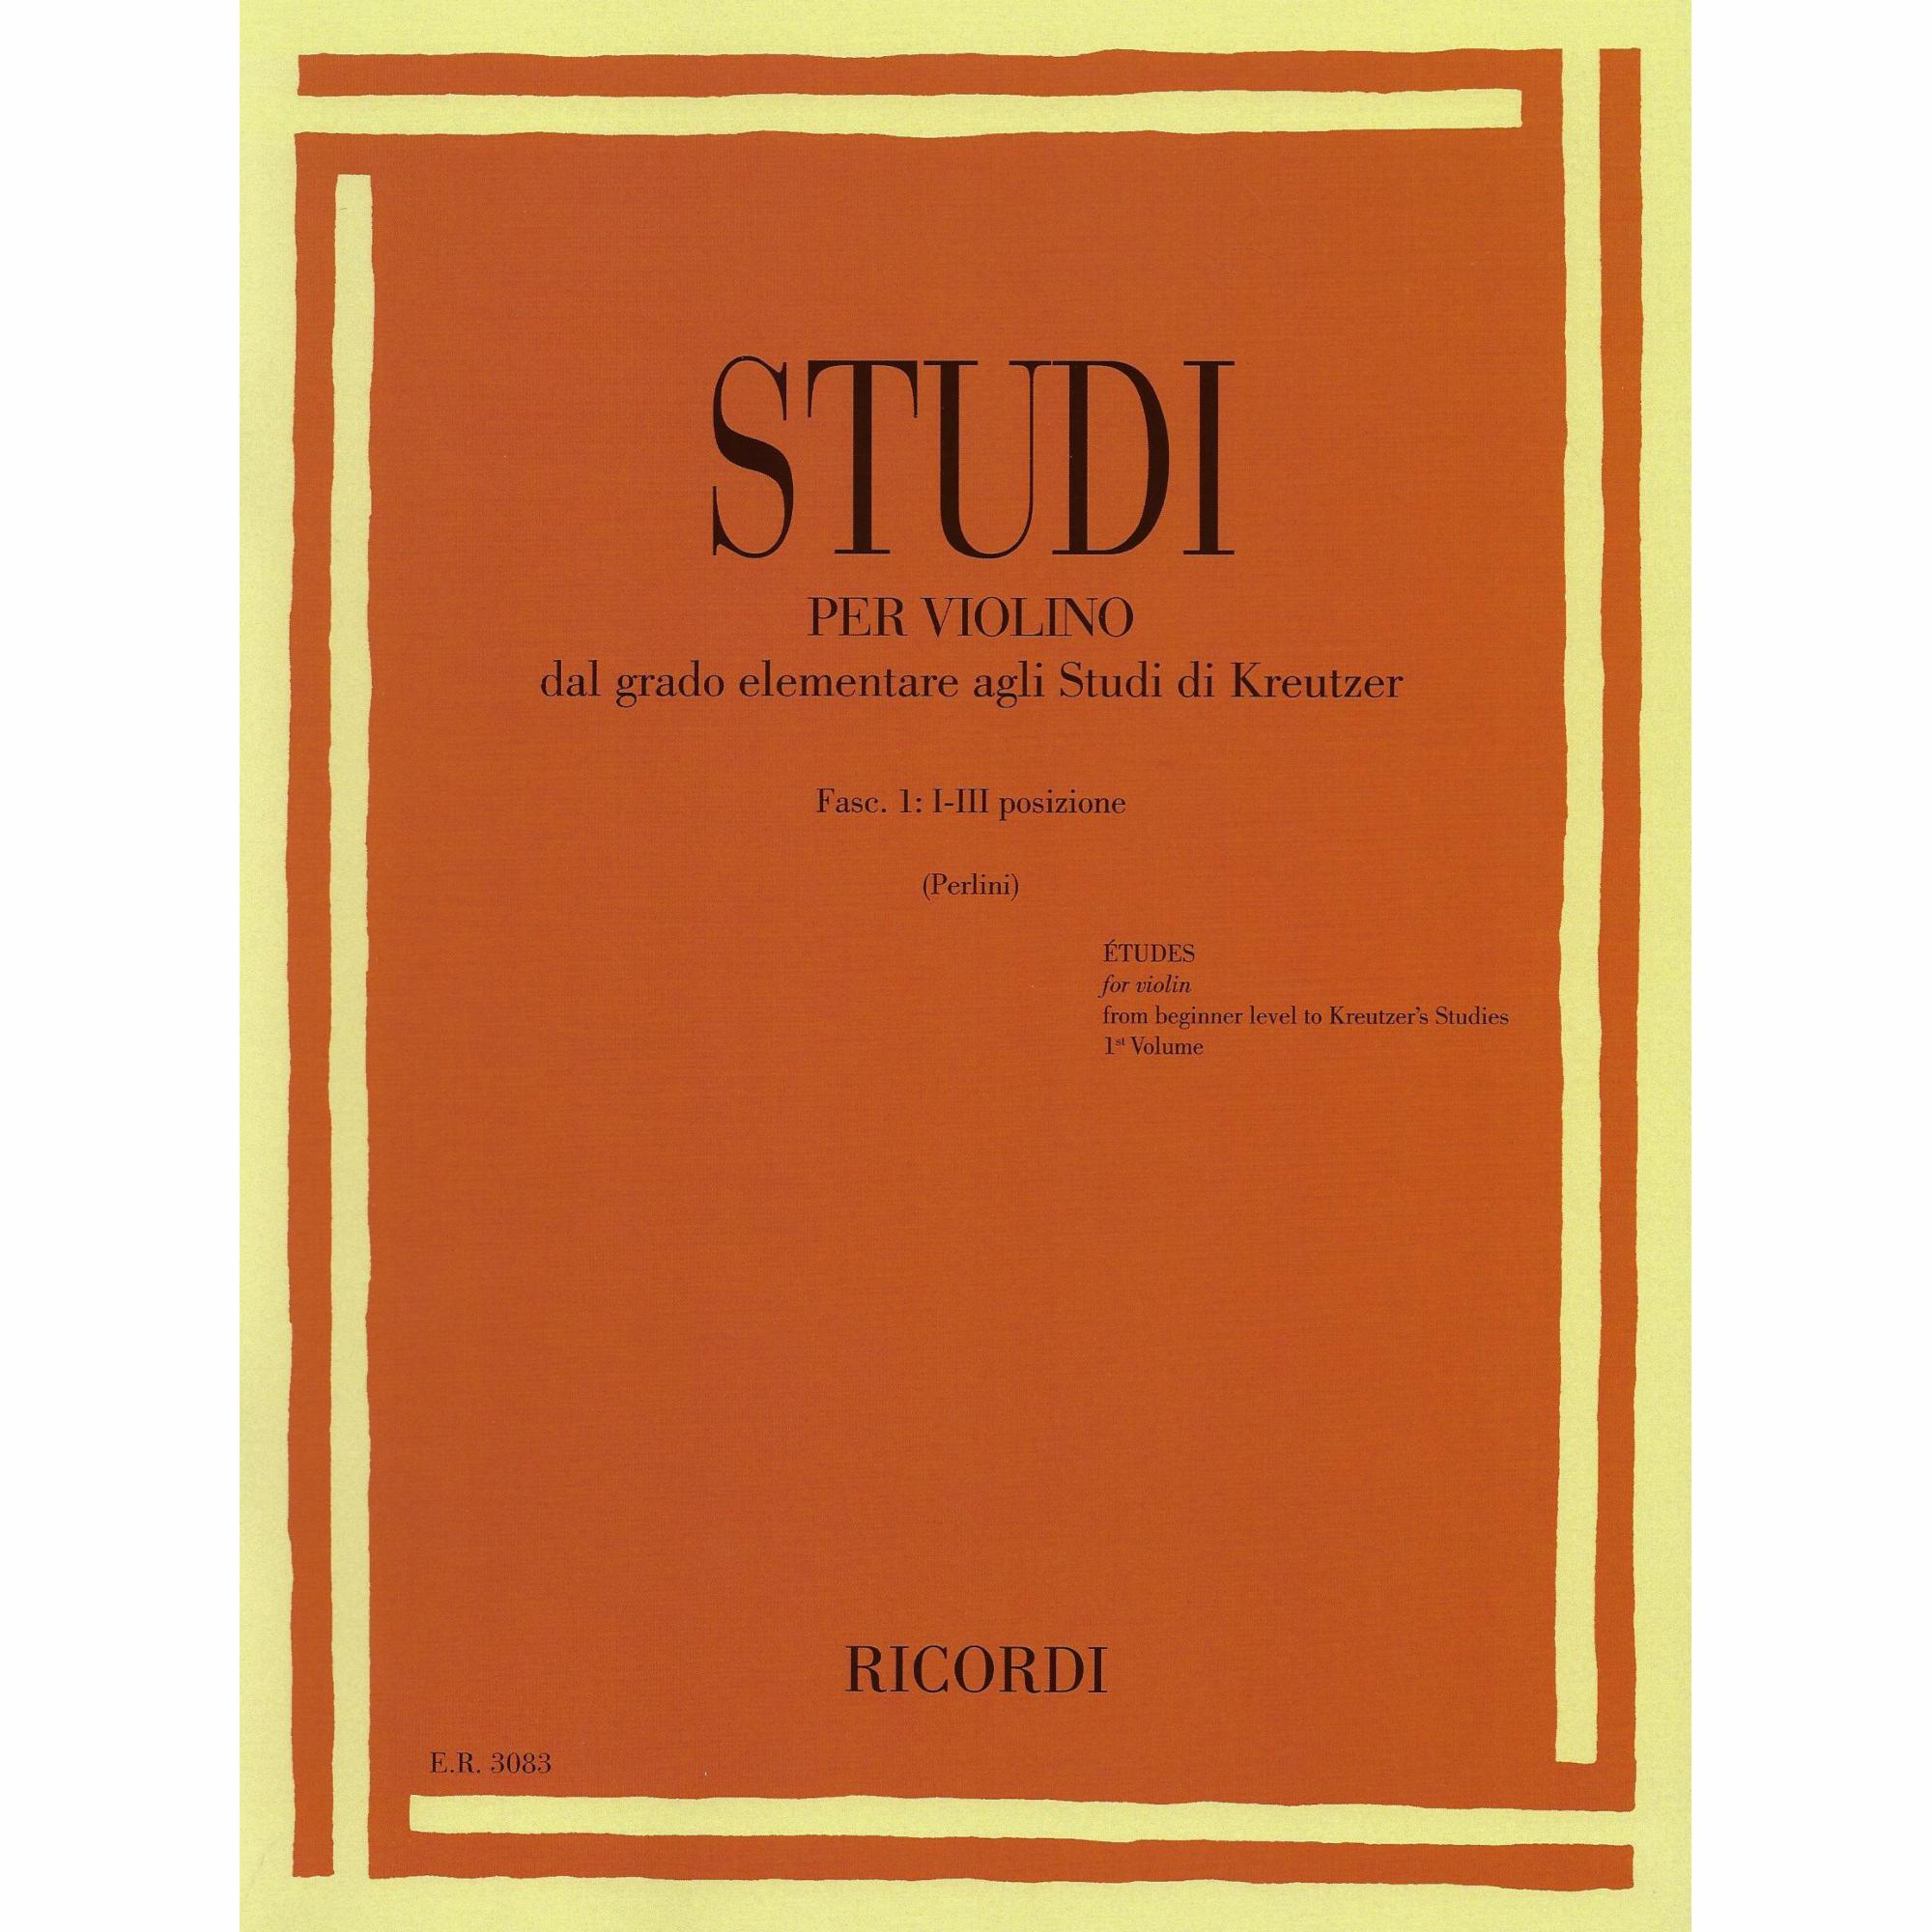 Etudes for Violin from Beginner Level to Kreutzer's Studies, Vols. 1-3